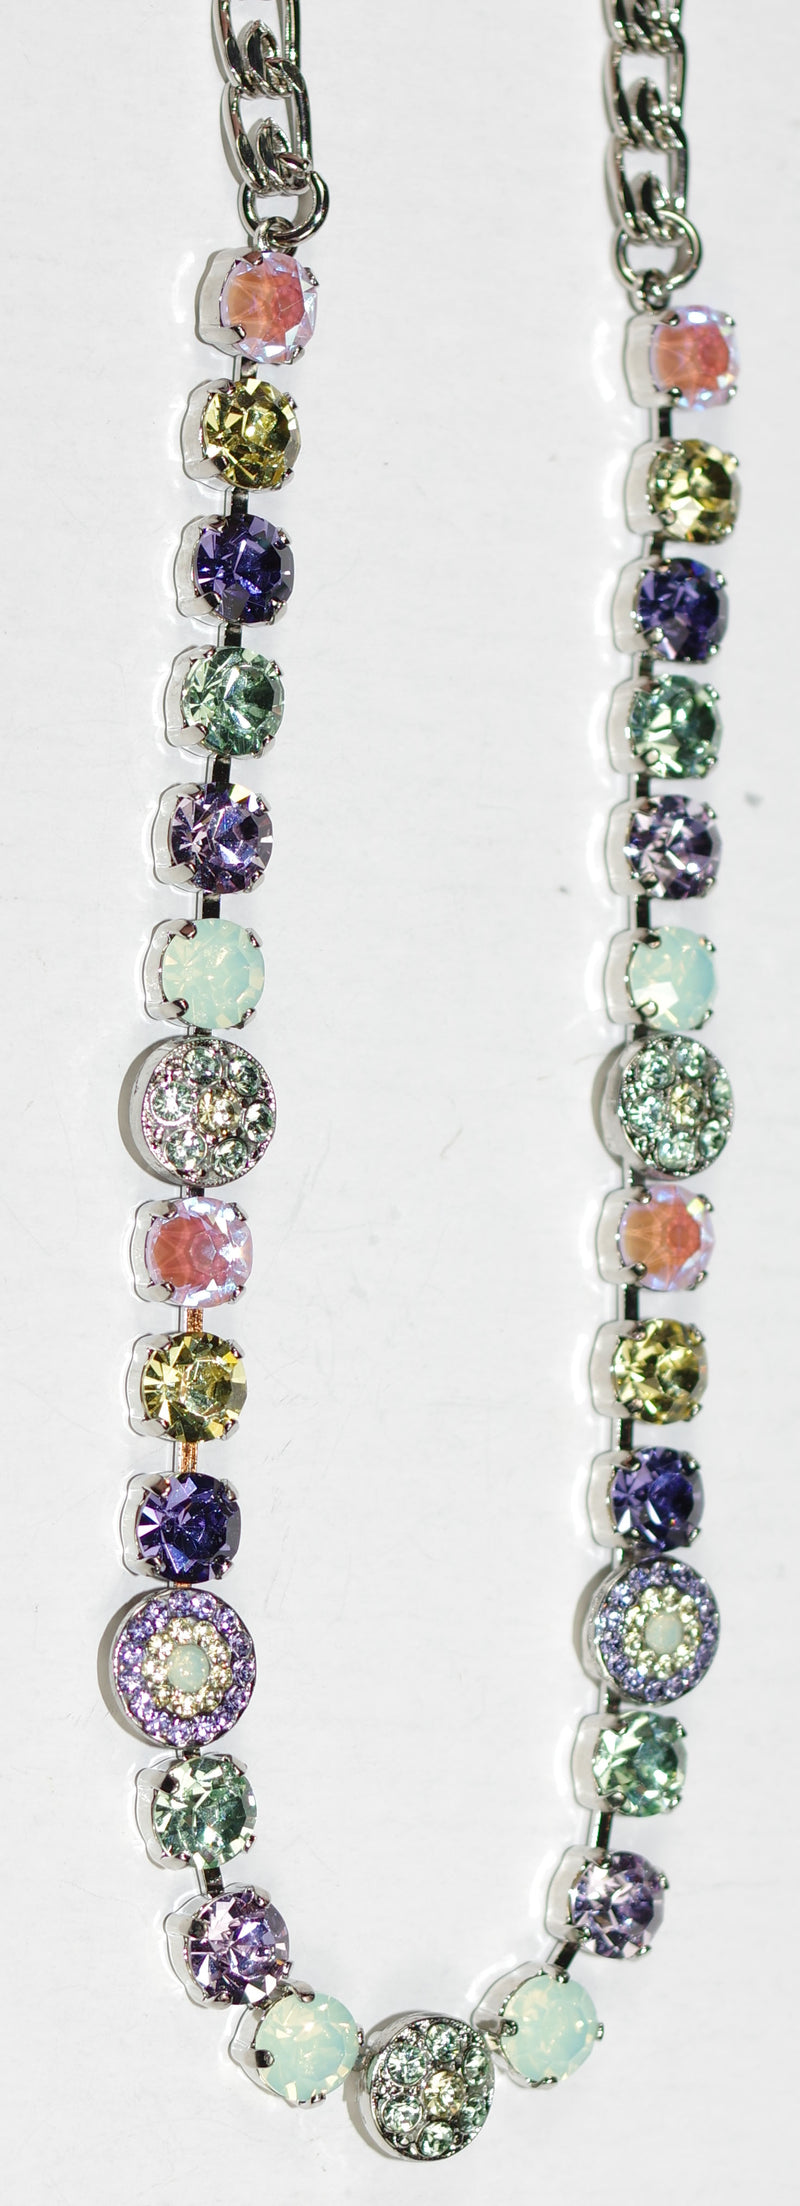 MARIANA NECKLACE TRAVELARA: purple, violet, rose, green,yellow stones in silver rhodium setting, 17" adjustable chain